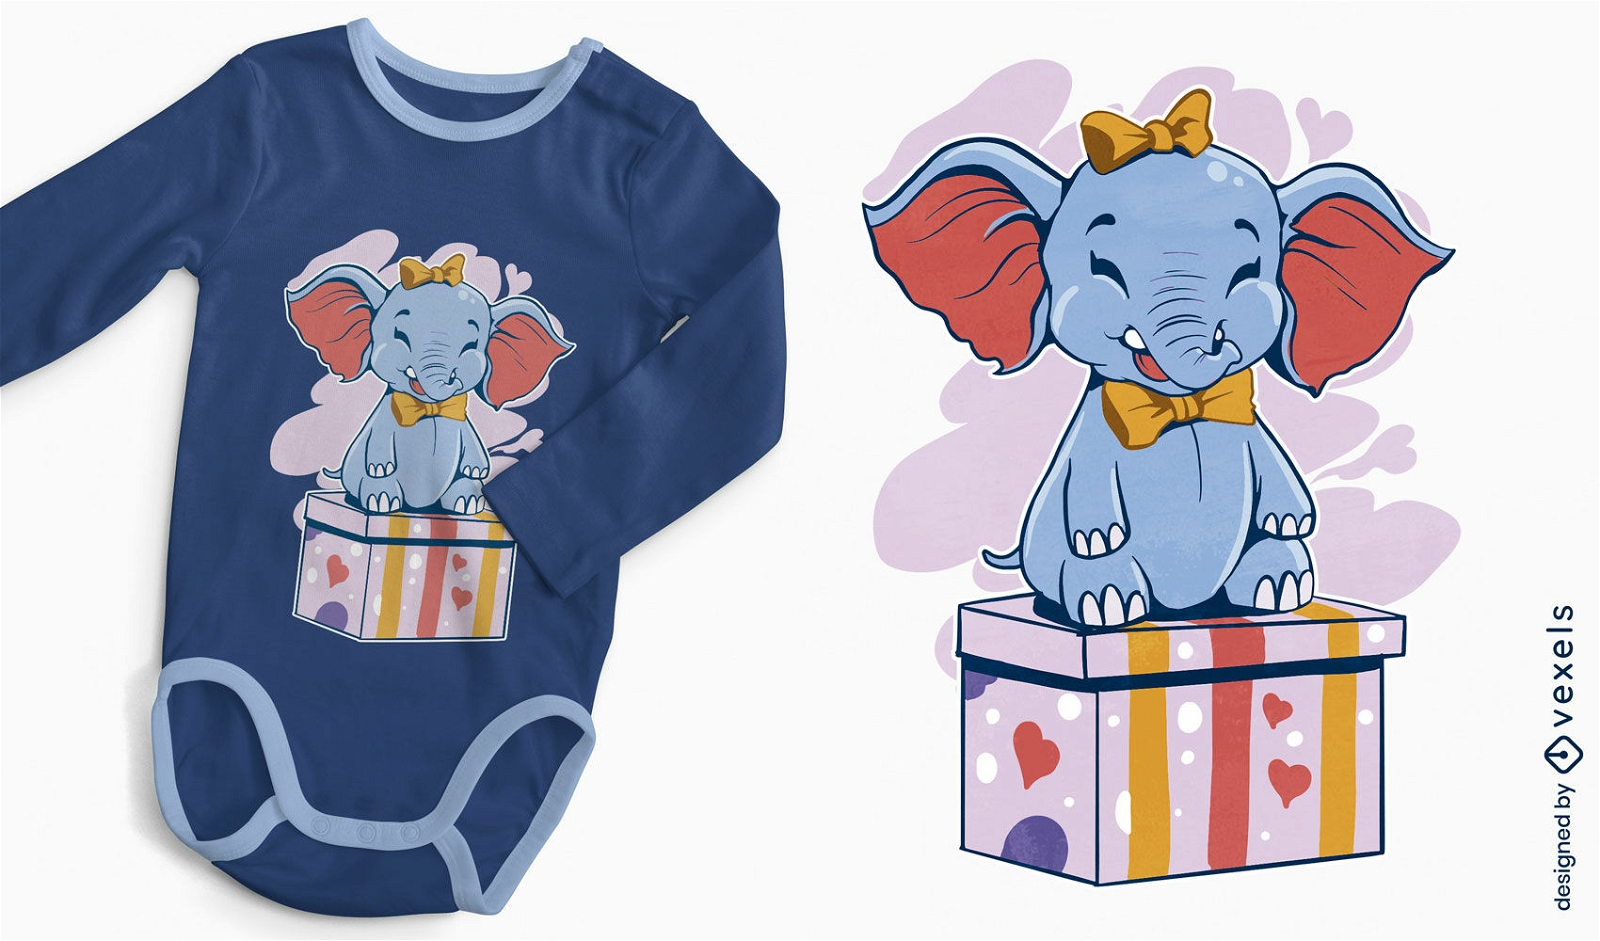 Elephant present t-shirt design